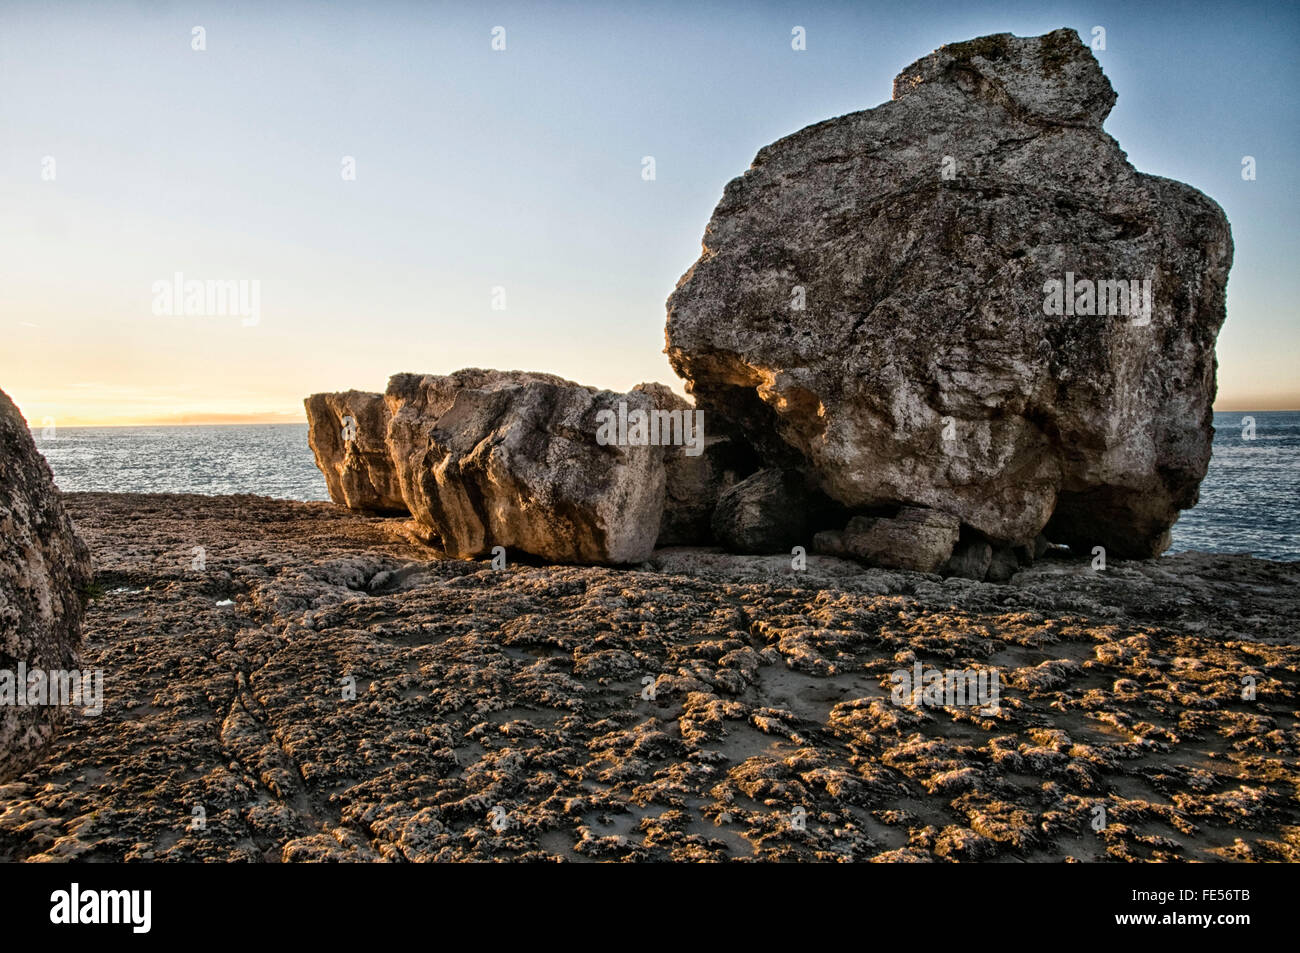 Europe, Spain, Balearic Islands, Majorca, Cala Santany. Stock Photo